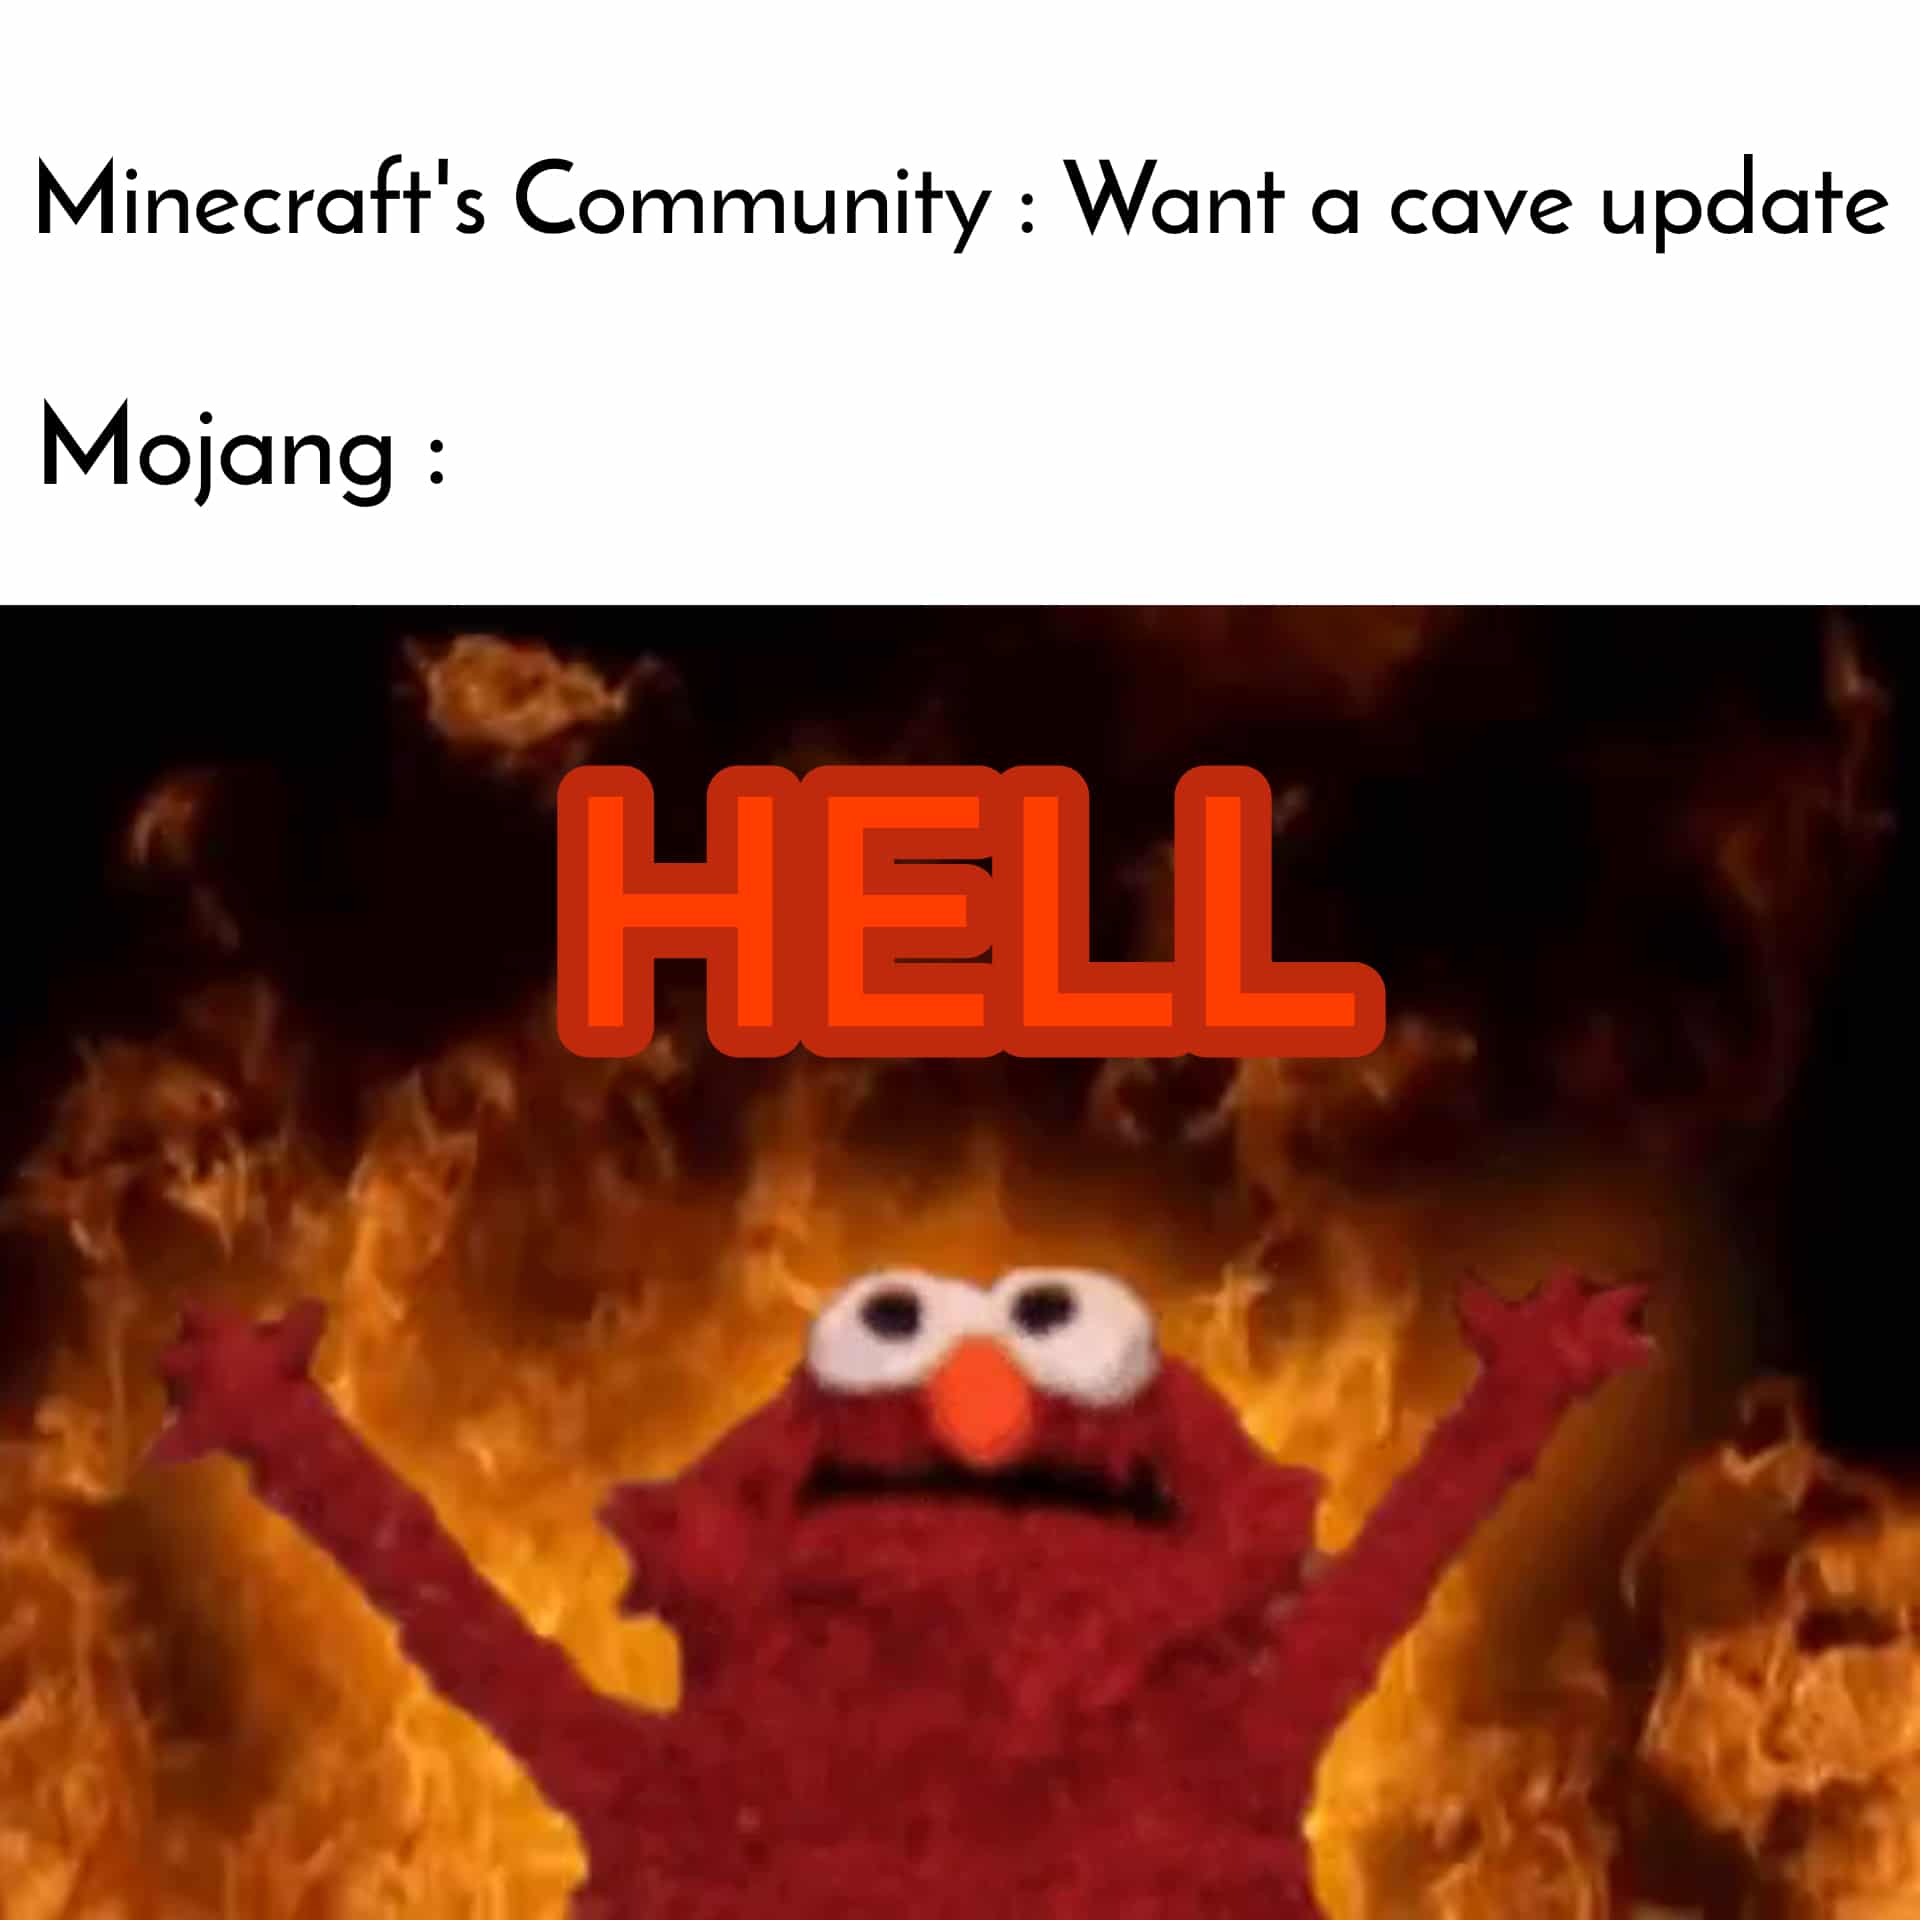 minecraft minecraft-memes minecraft text: Minecraftls Community : Want a cave update Mojang : 